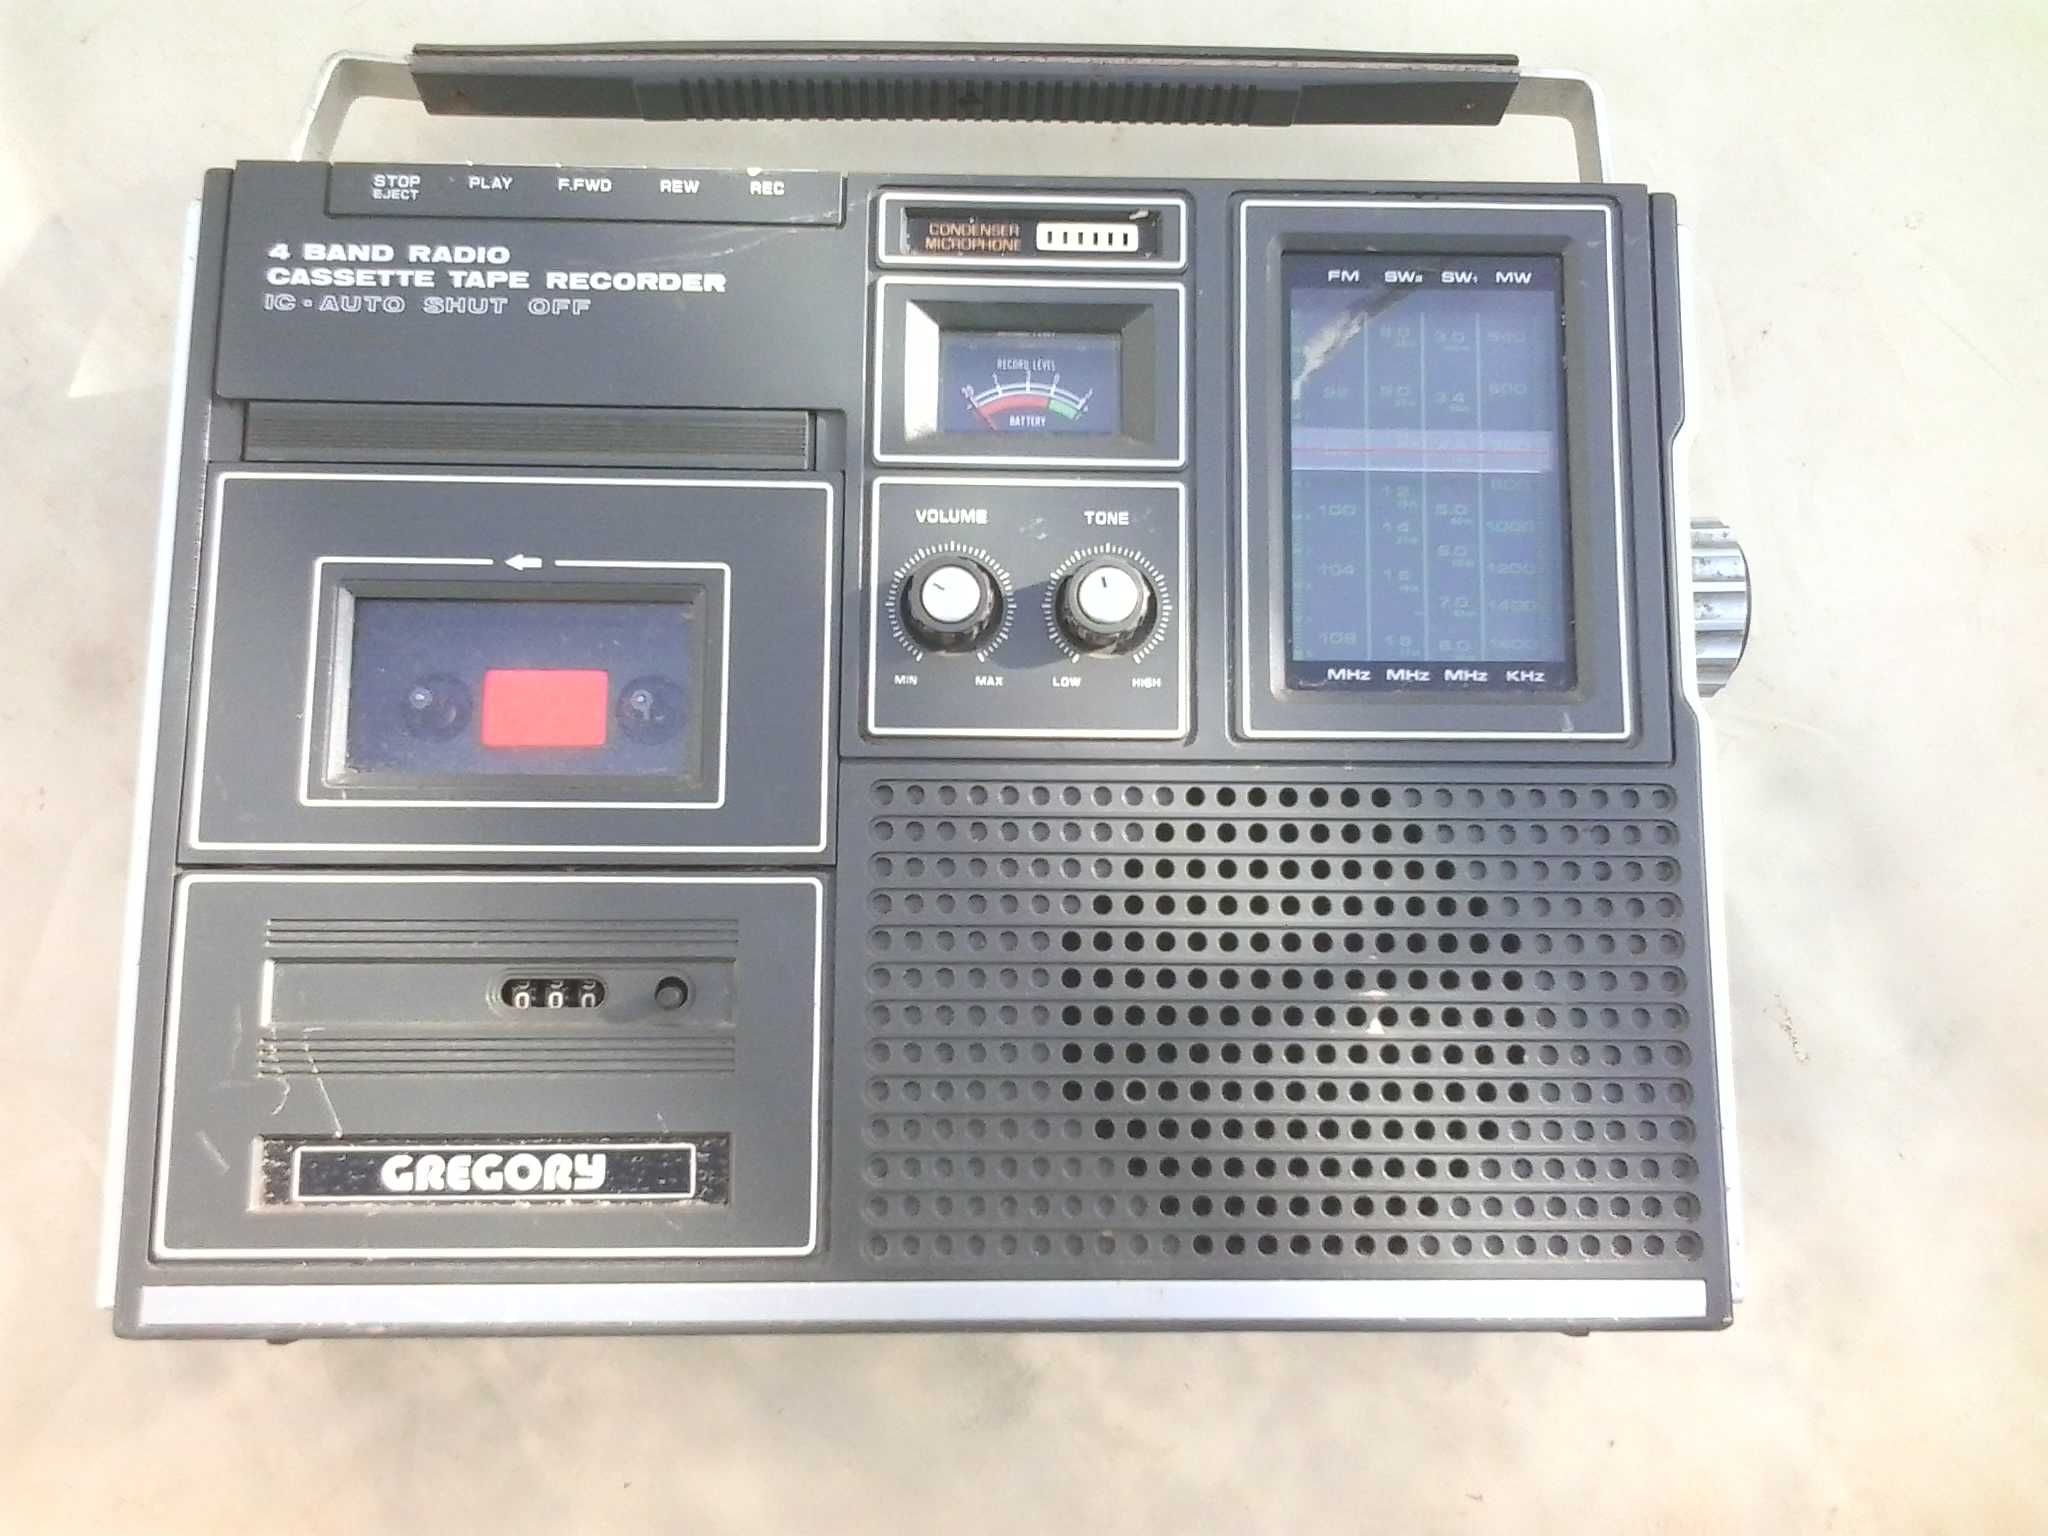 Radio Cassete Japonês Gregory anos 70